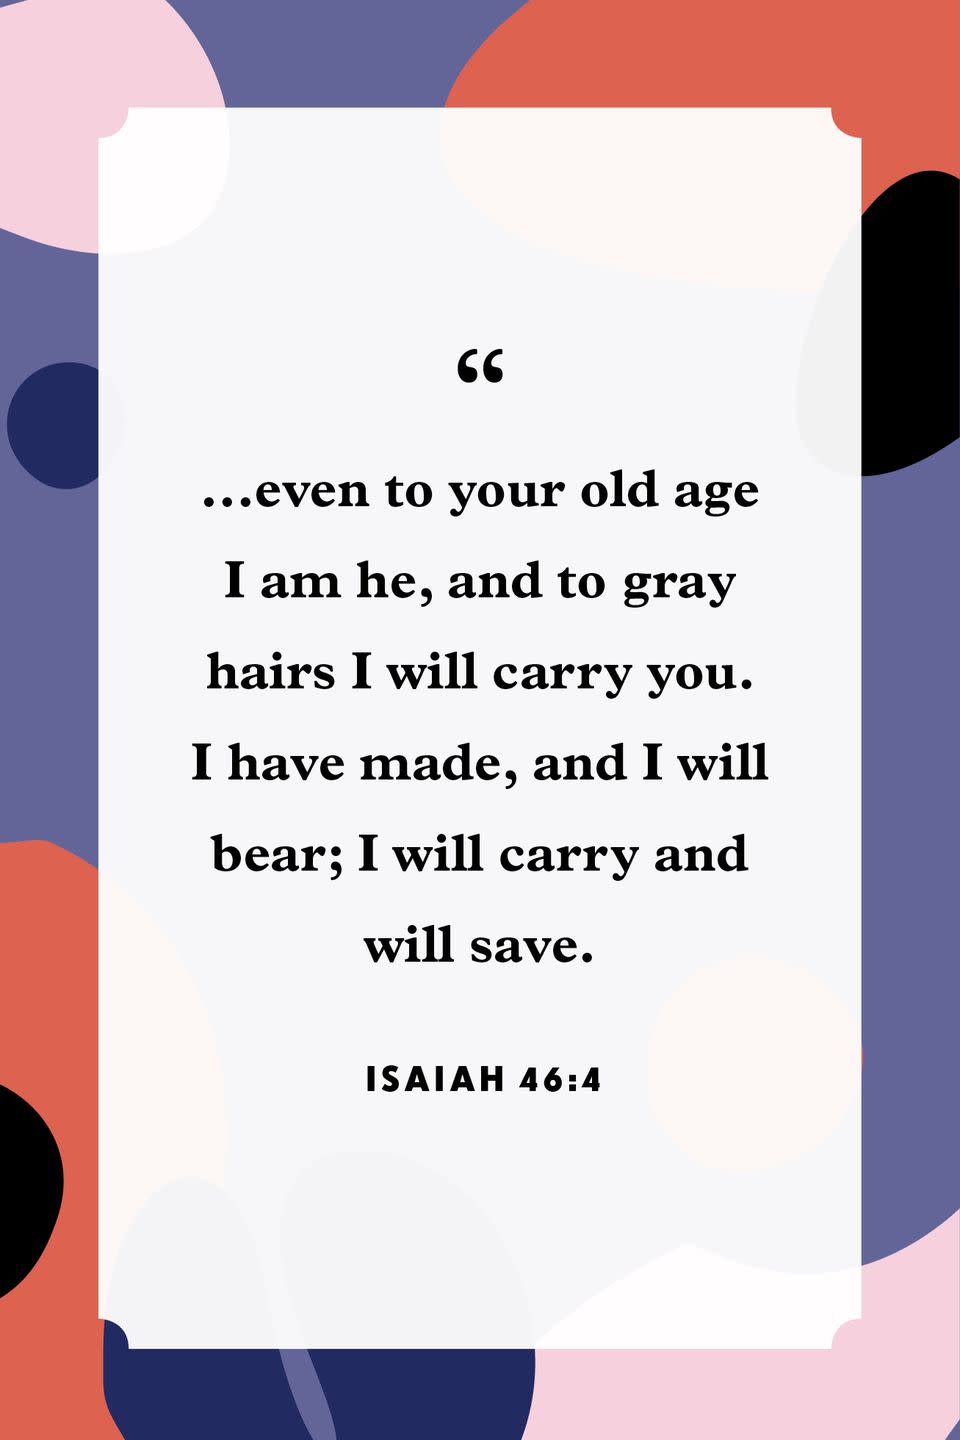 4) Isaiah 46:4